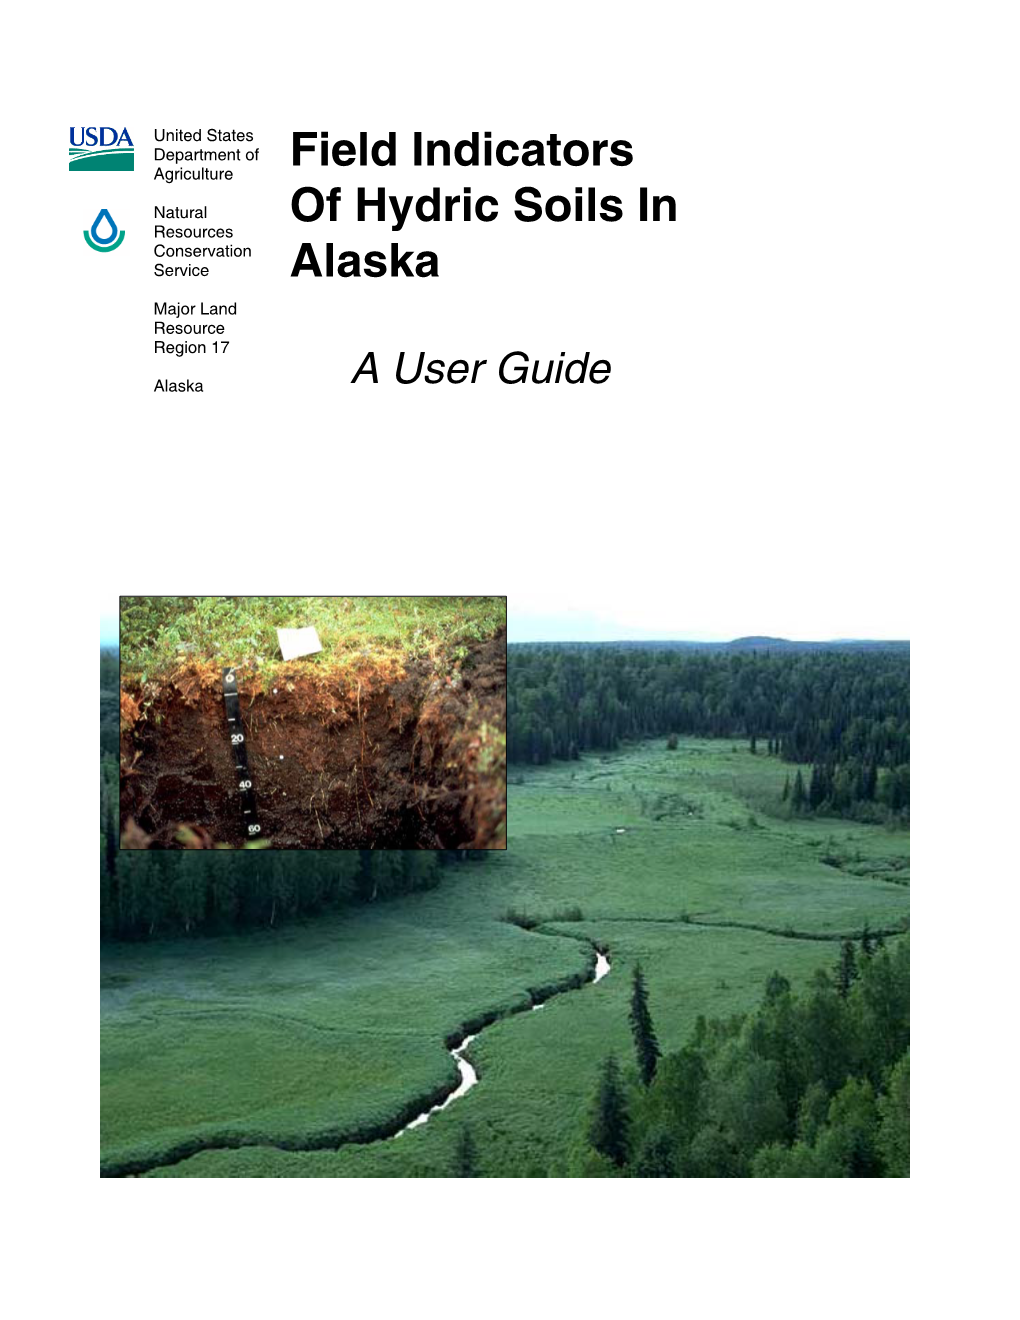 Alaska Hydric Soil Guide